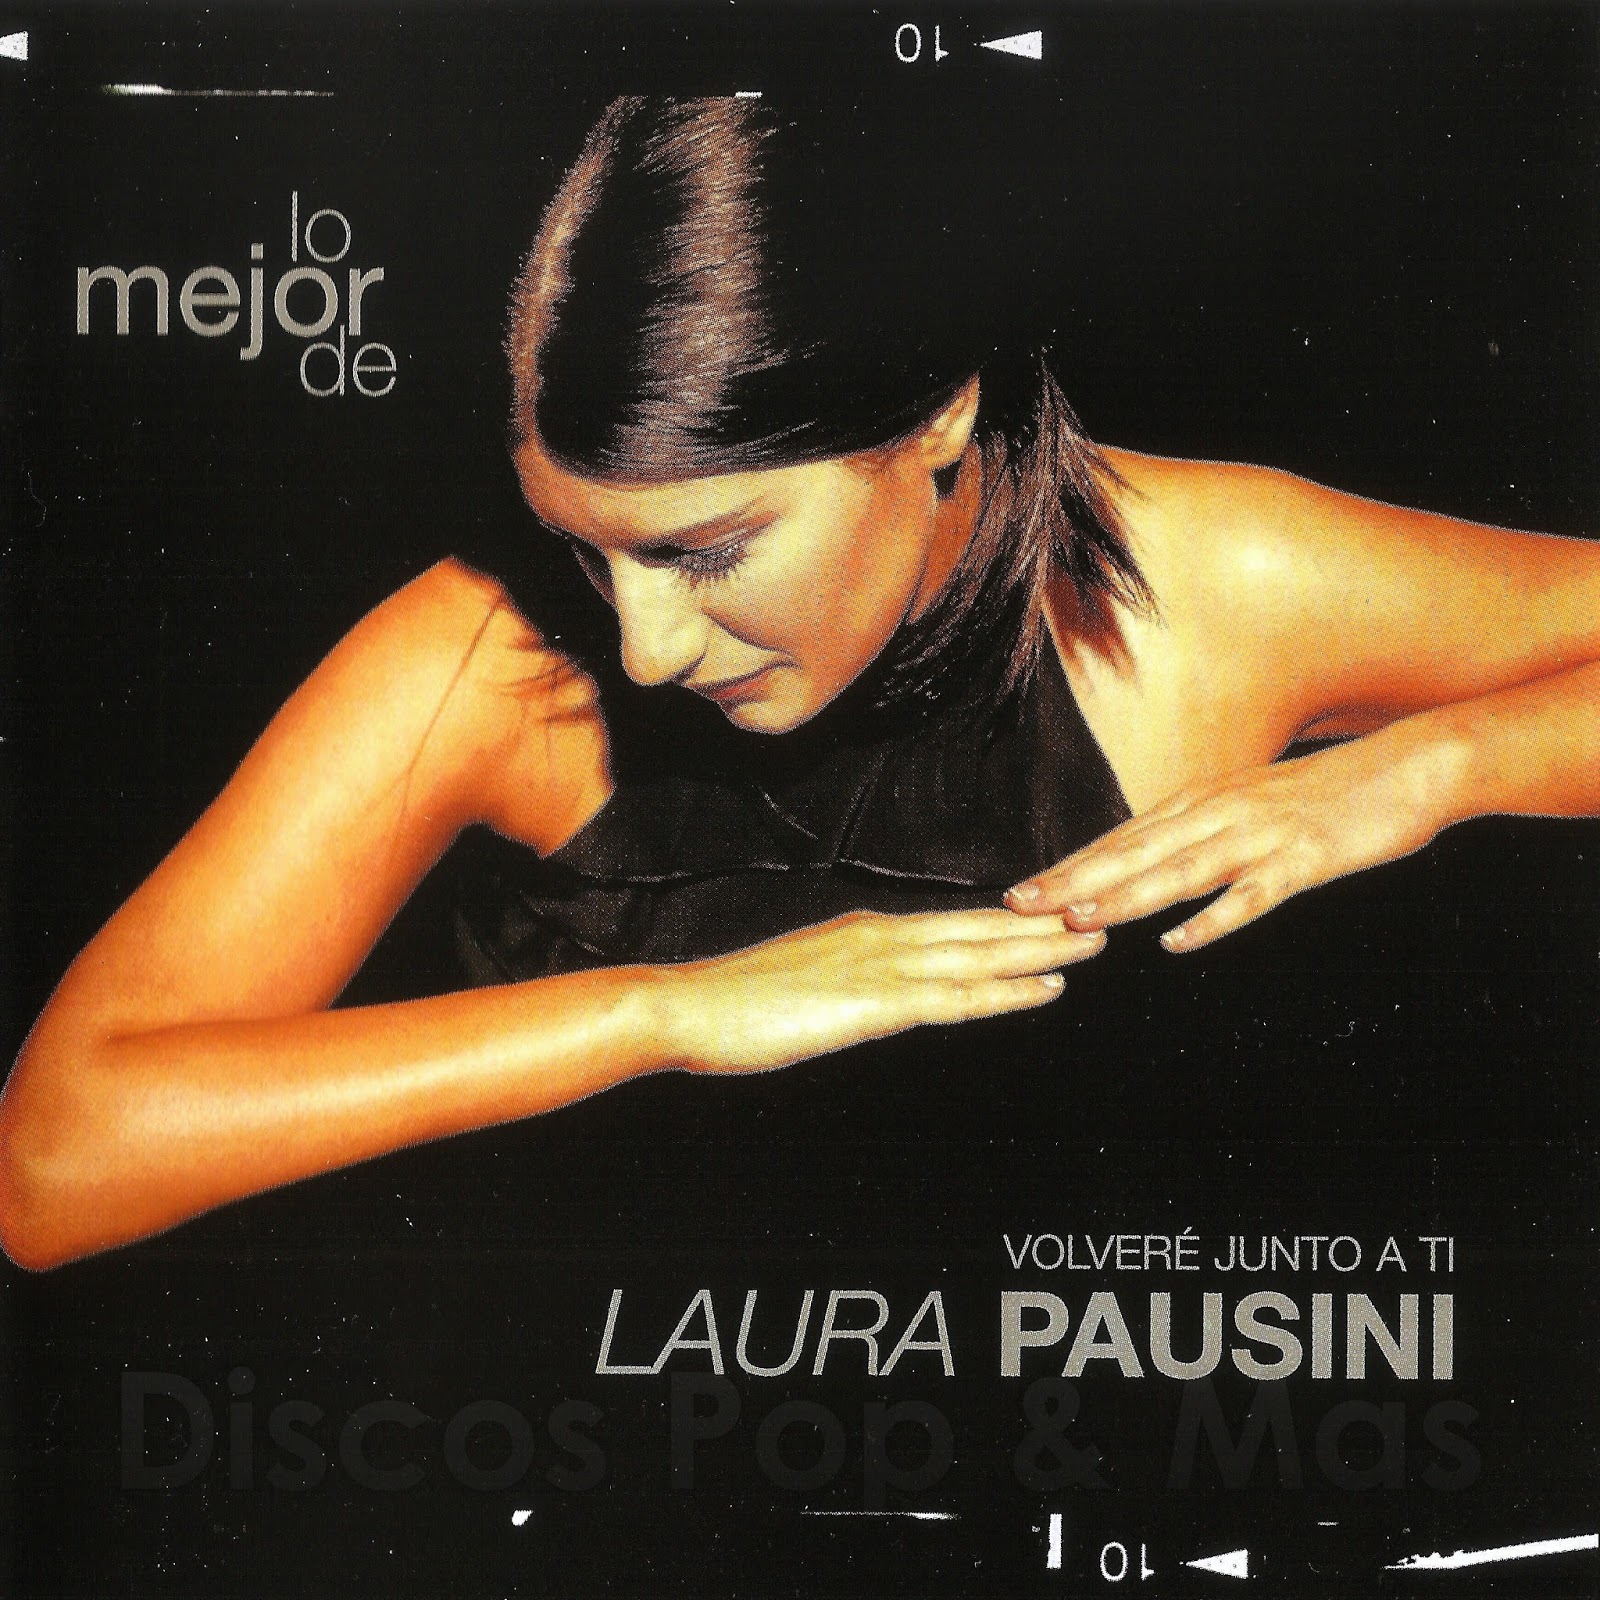 Discos Pop And Mas Laura Pausini Lo Mejor De Laura Pausini Volveré